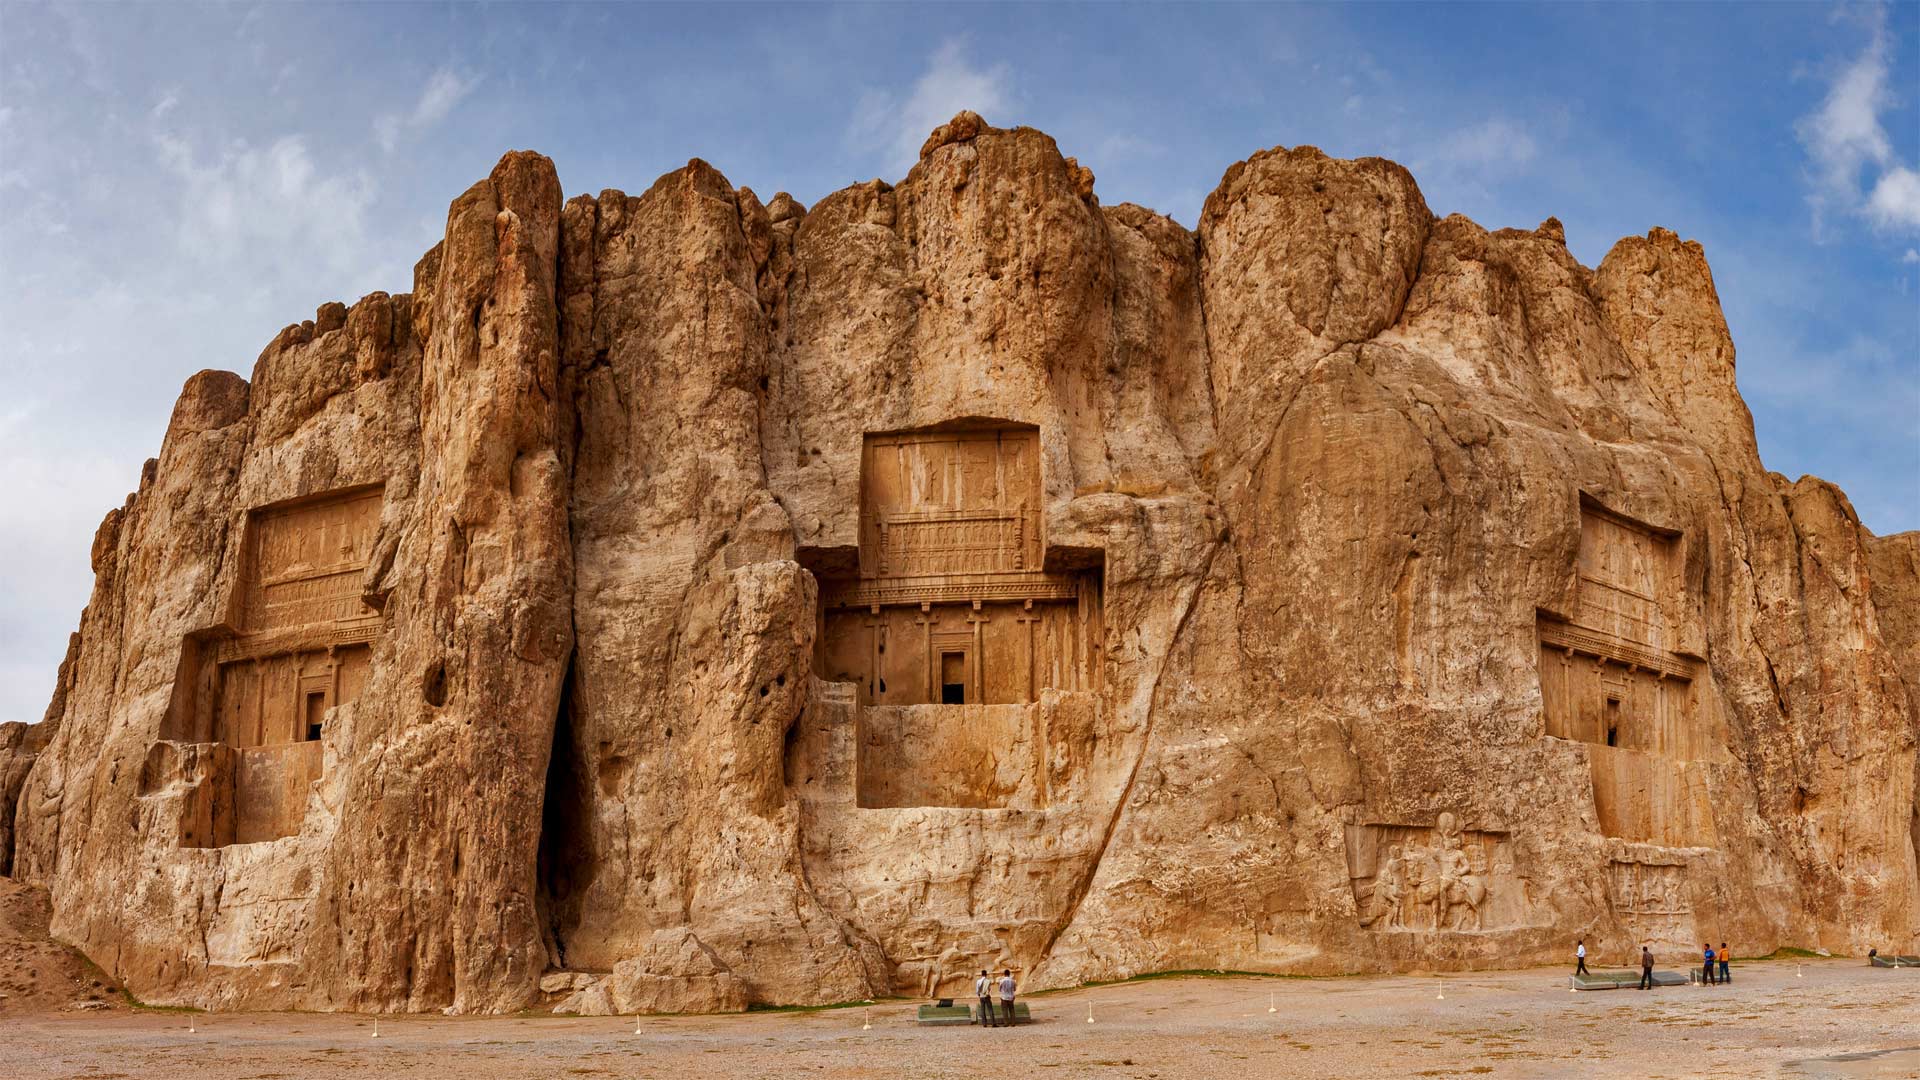 Naqsh-e Rostam archaeological site near Persepolis, Iran - mshirani/Shutterstock)